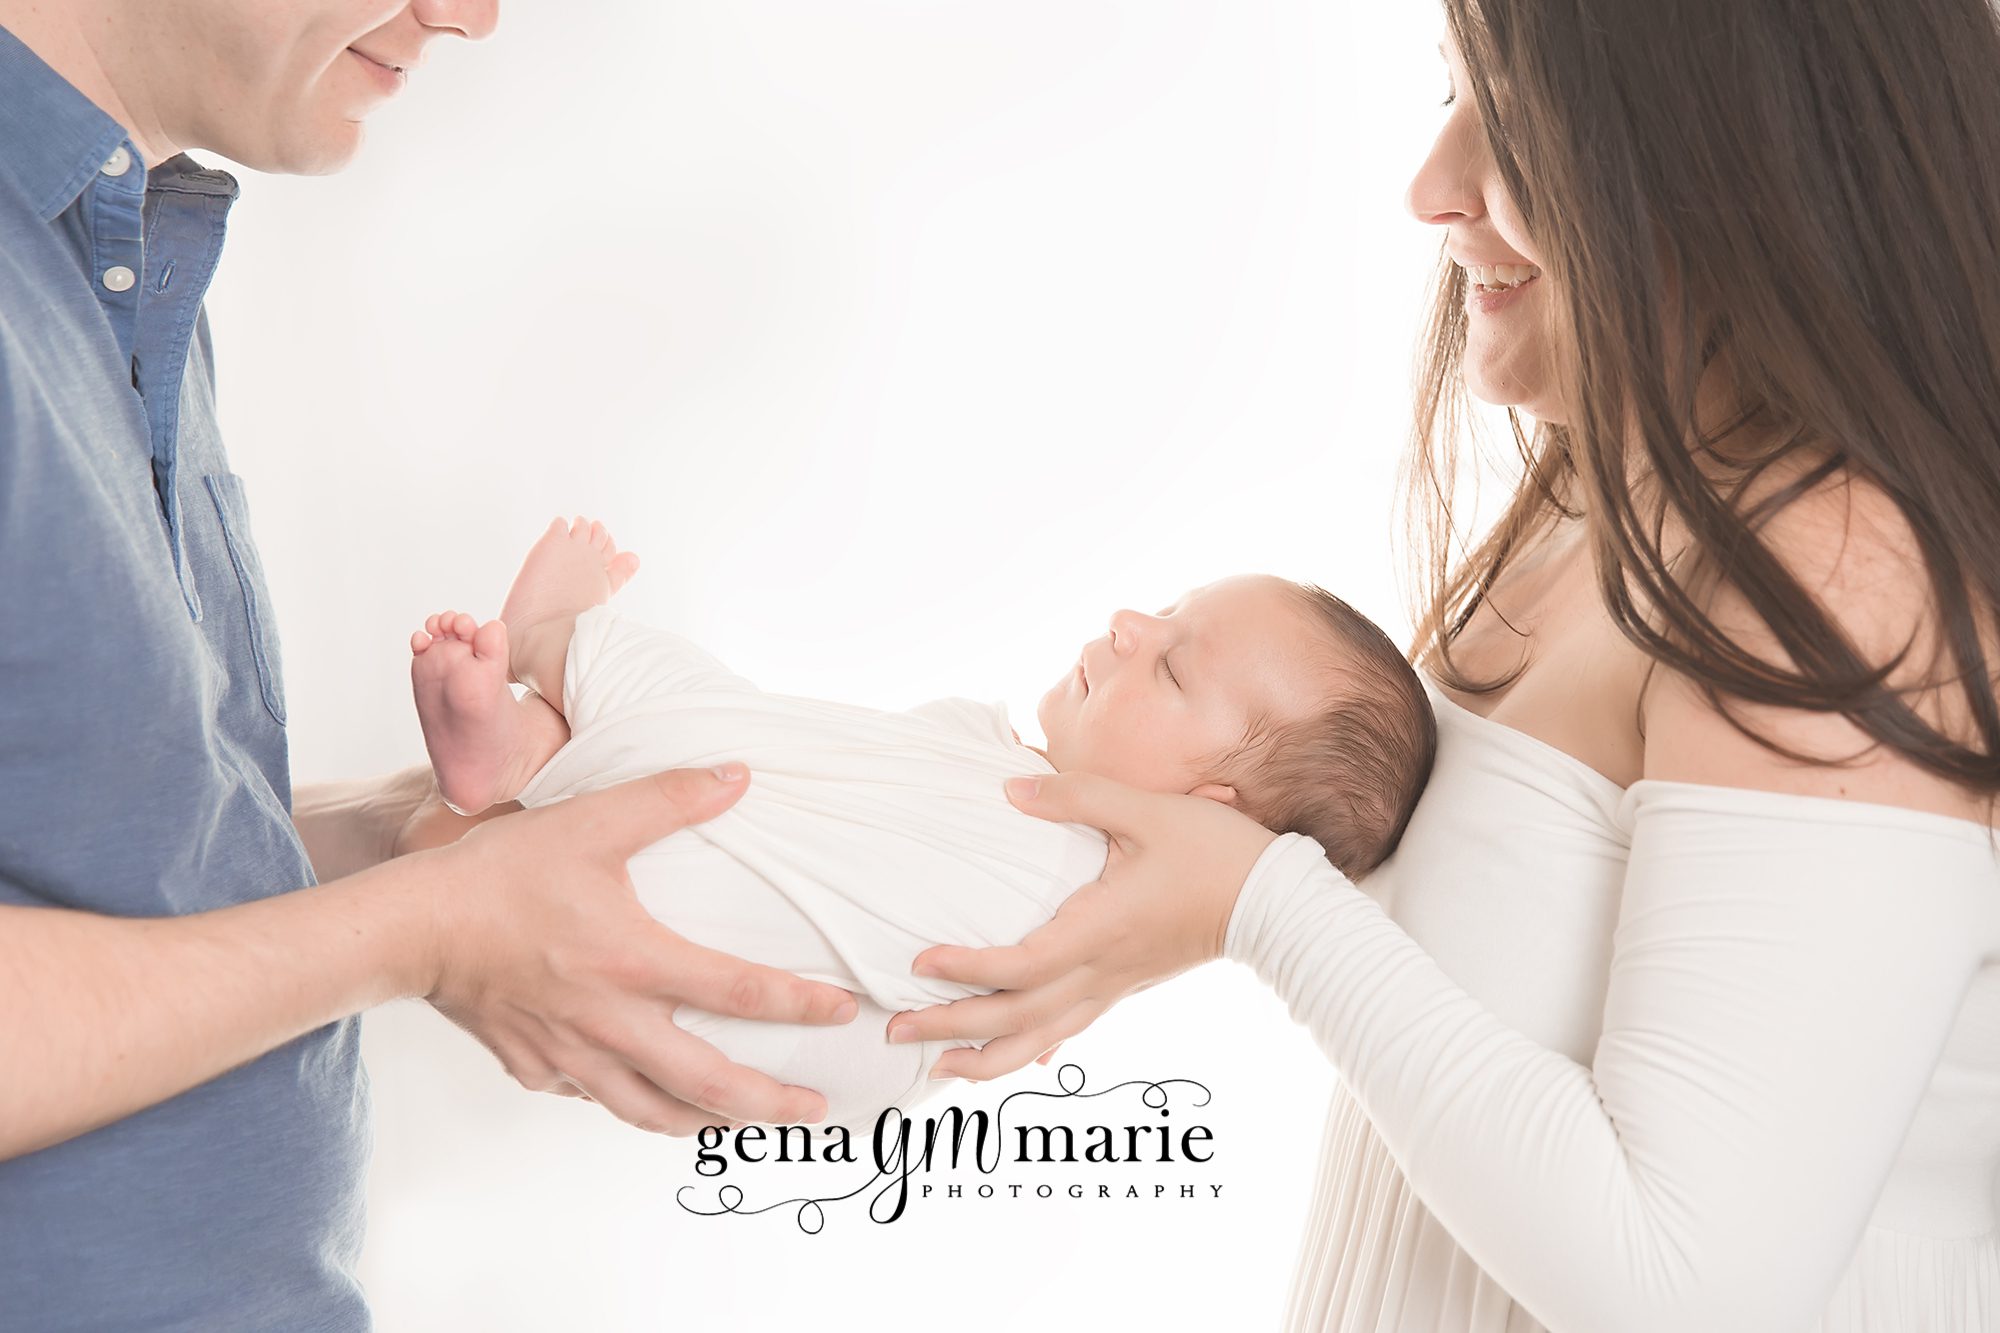 6 week old newborn - dc newborn photographer